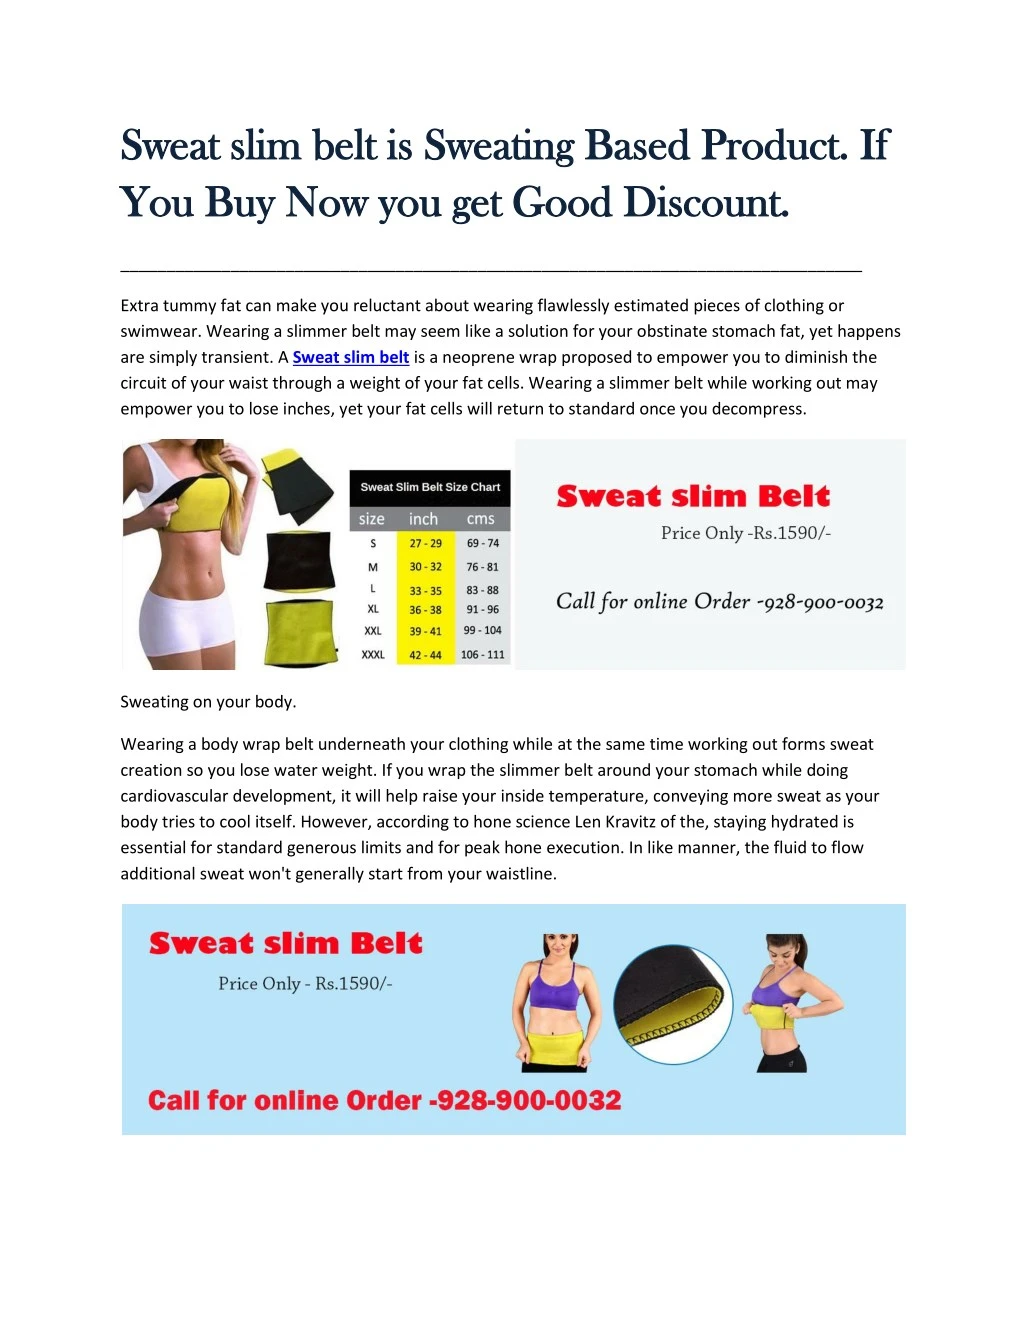 sweat slim belt is sweating based product